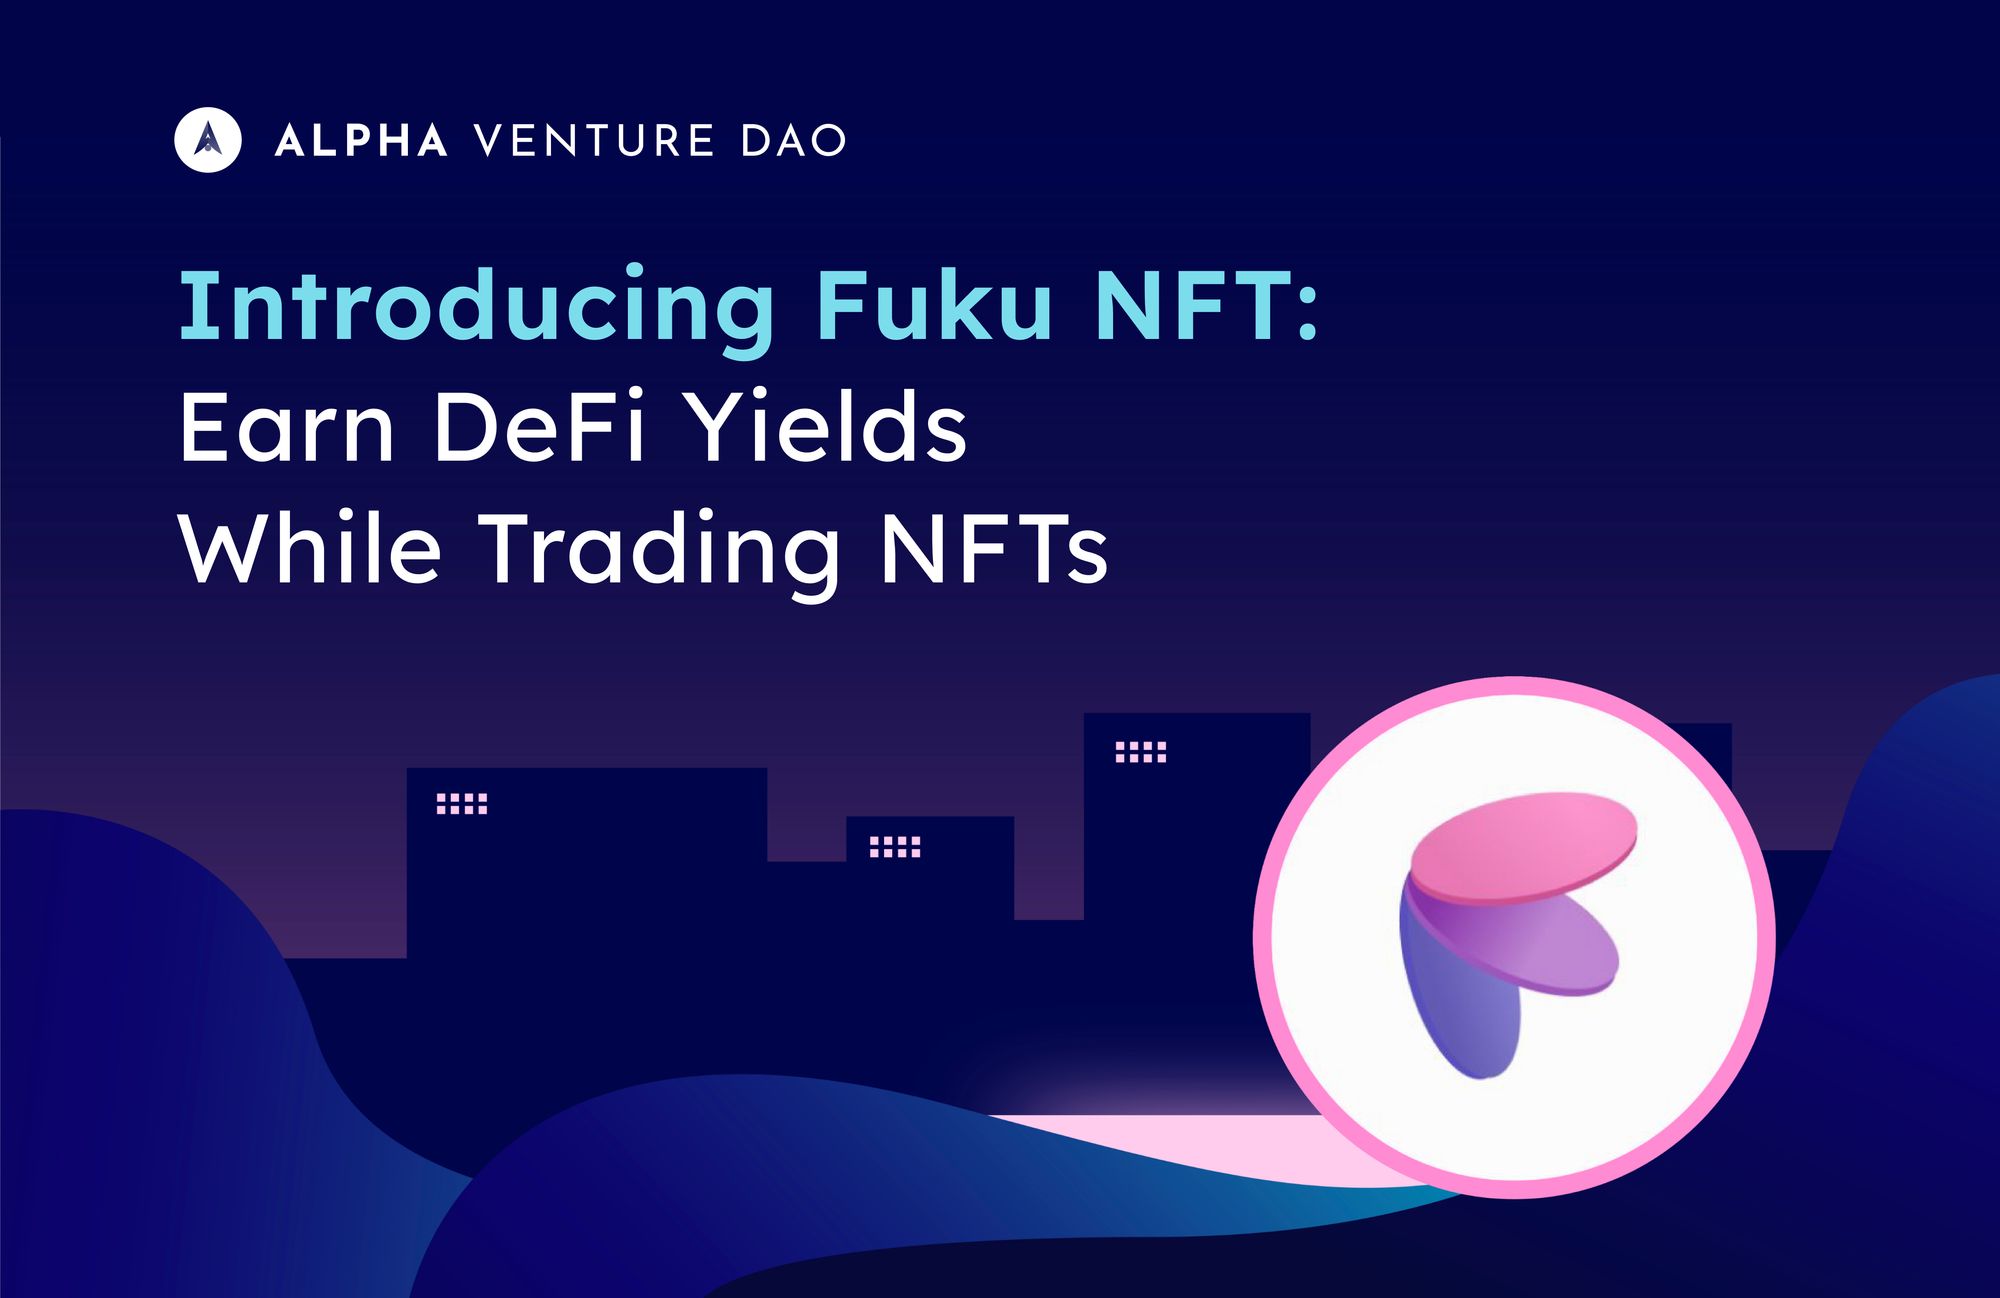 Announcing Fuku NFT: Alpha Venture DAO’s Incubated Project Bridging NFT and DeFi